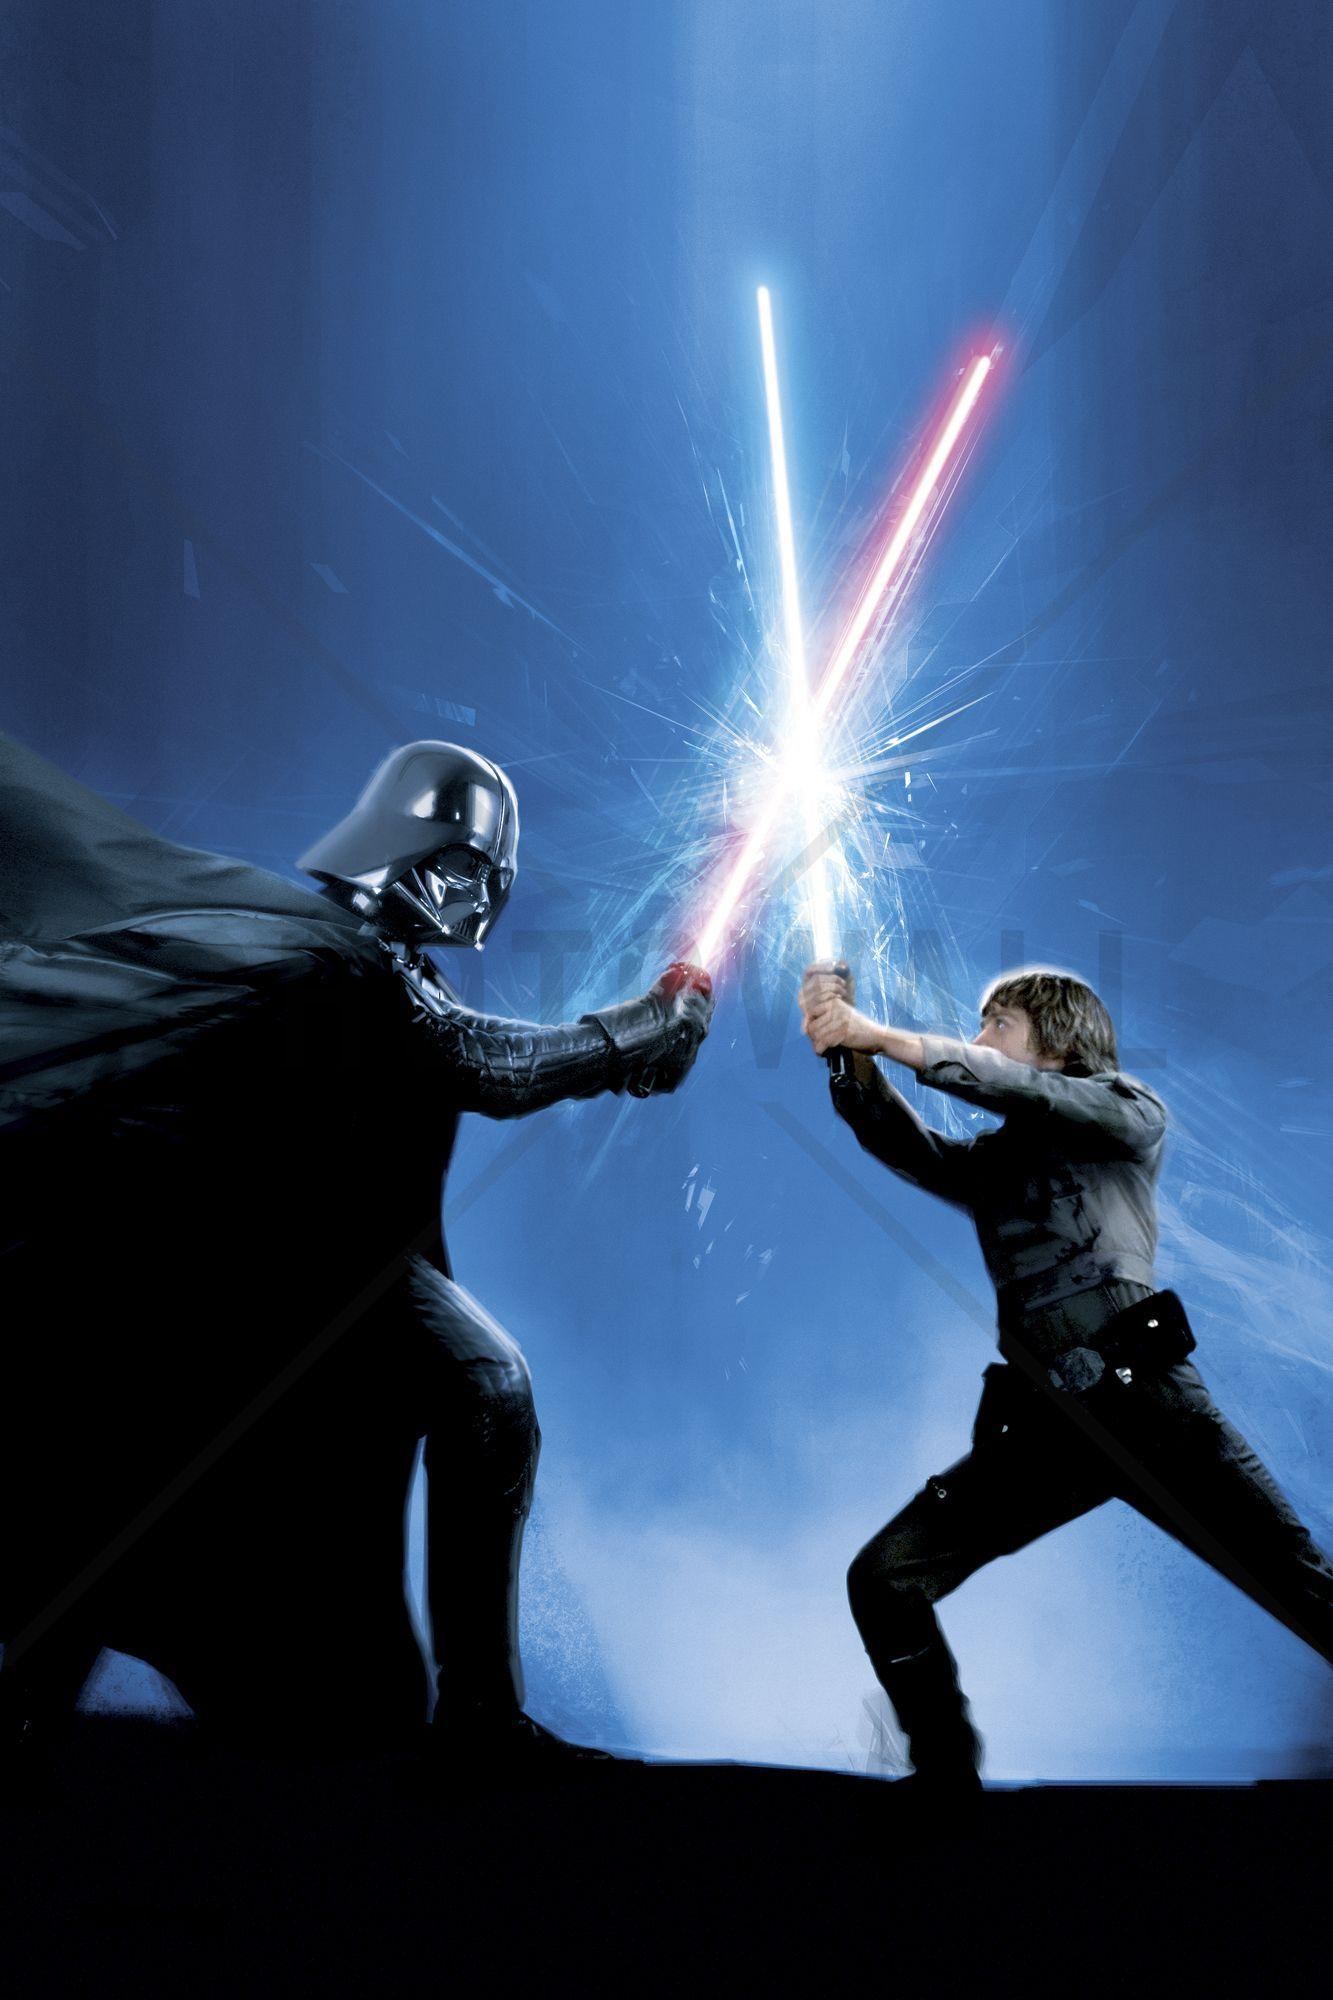 Darth Vader and Luke Skywalker Wallpaper Free Darth Vader and Luke Skywalker Background